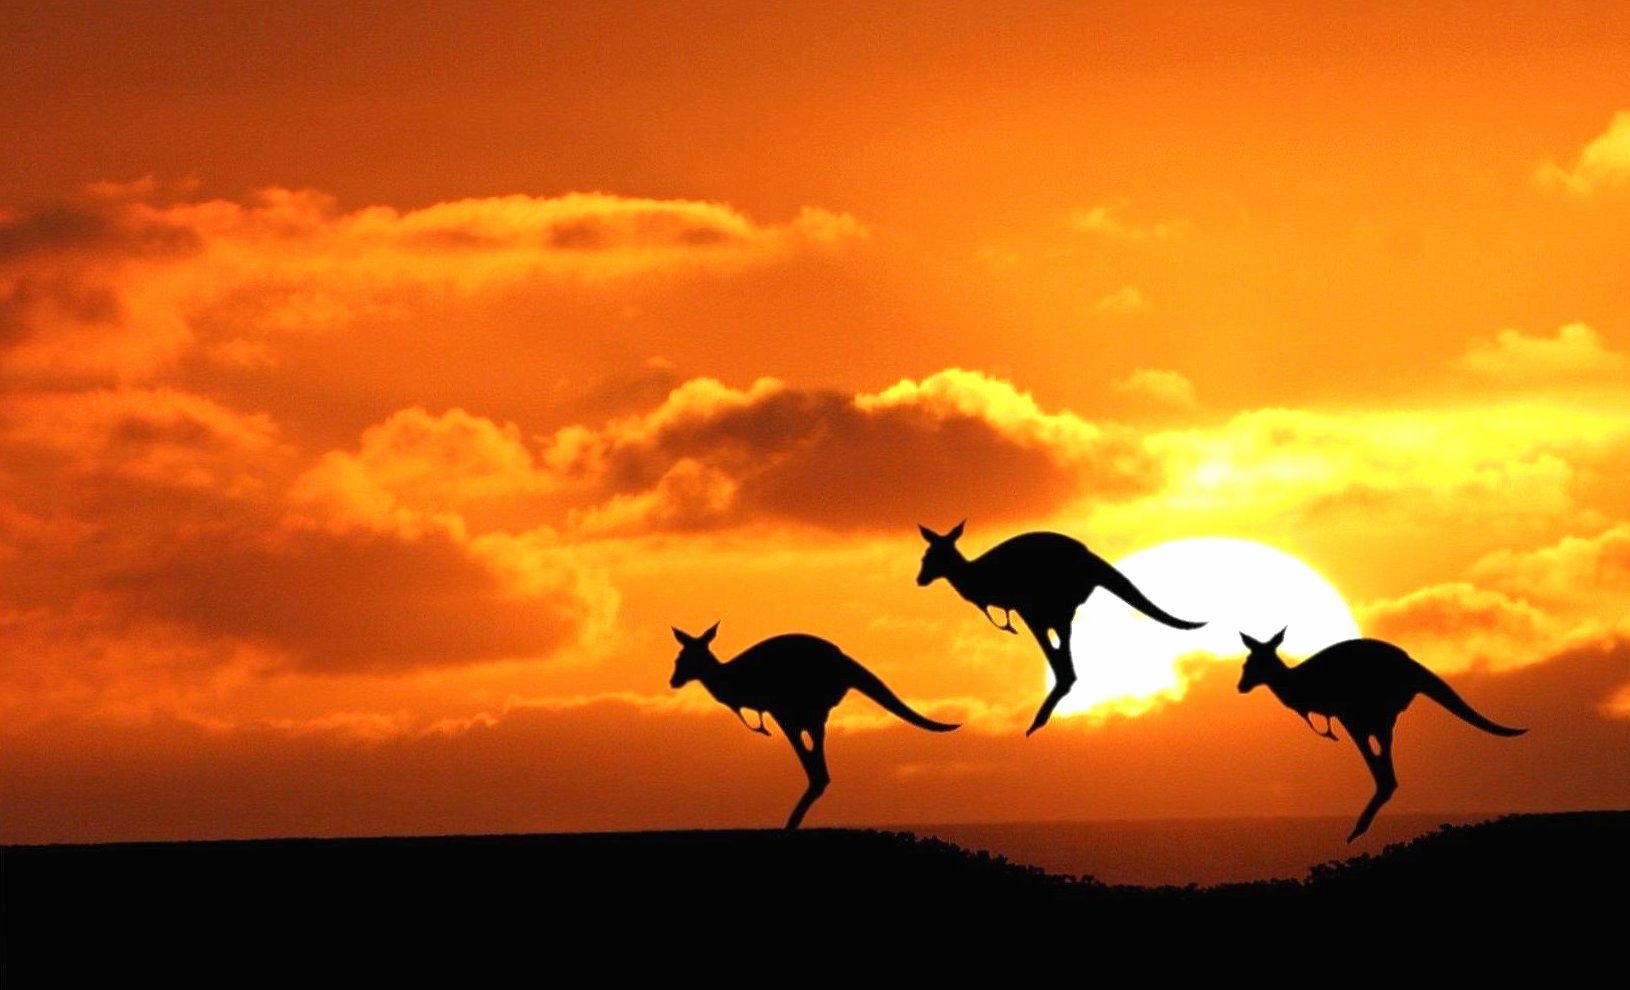 Sunset kangaroo at 1600 x 1200 size wallpapers HD quality